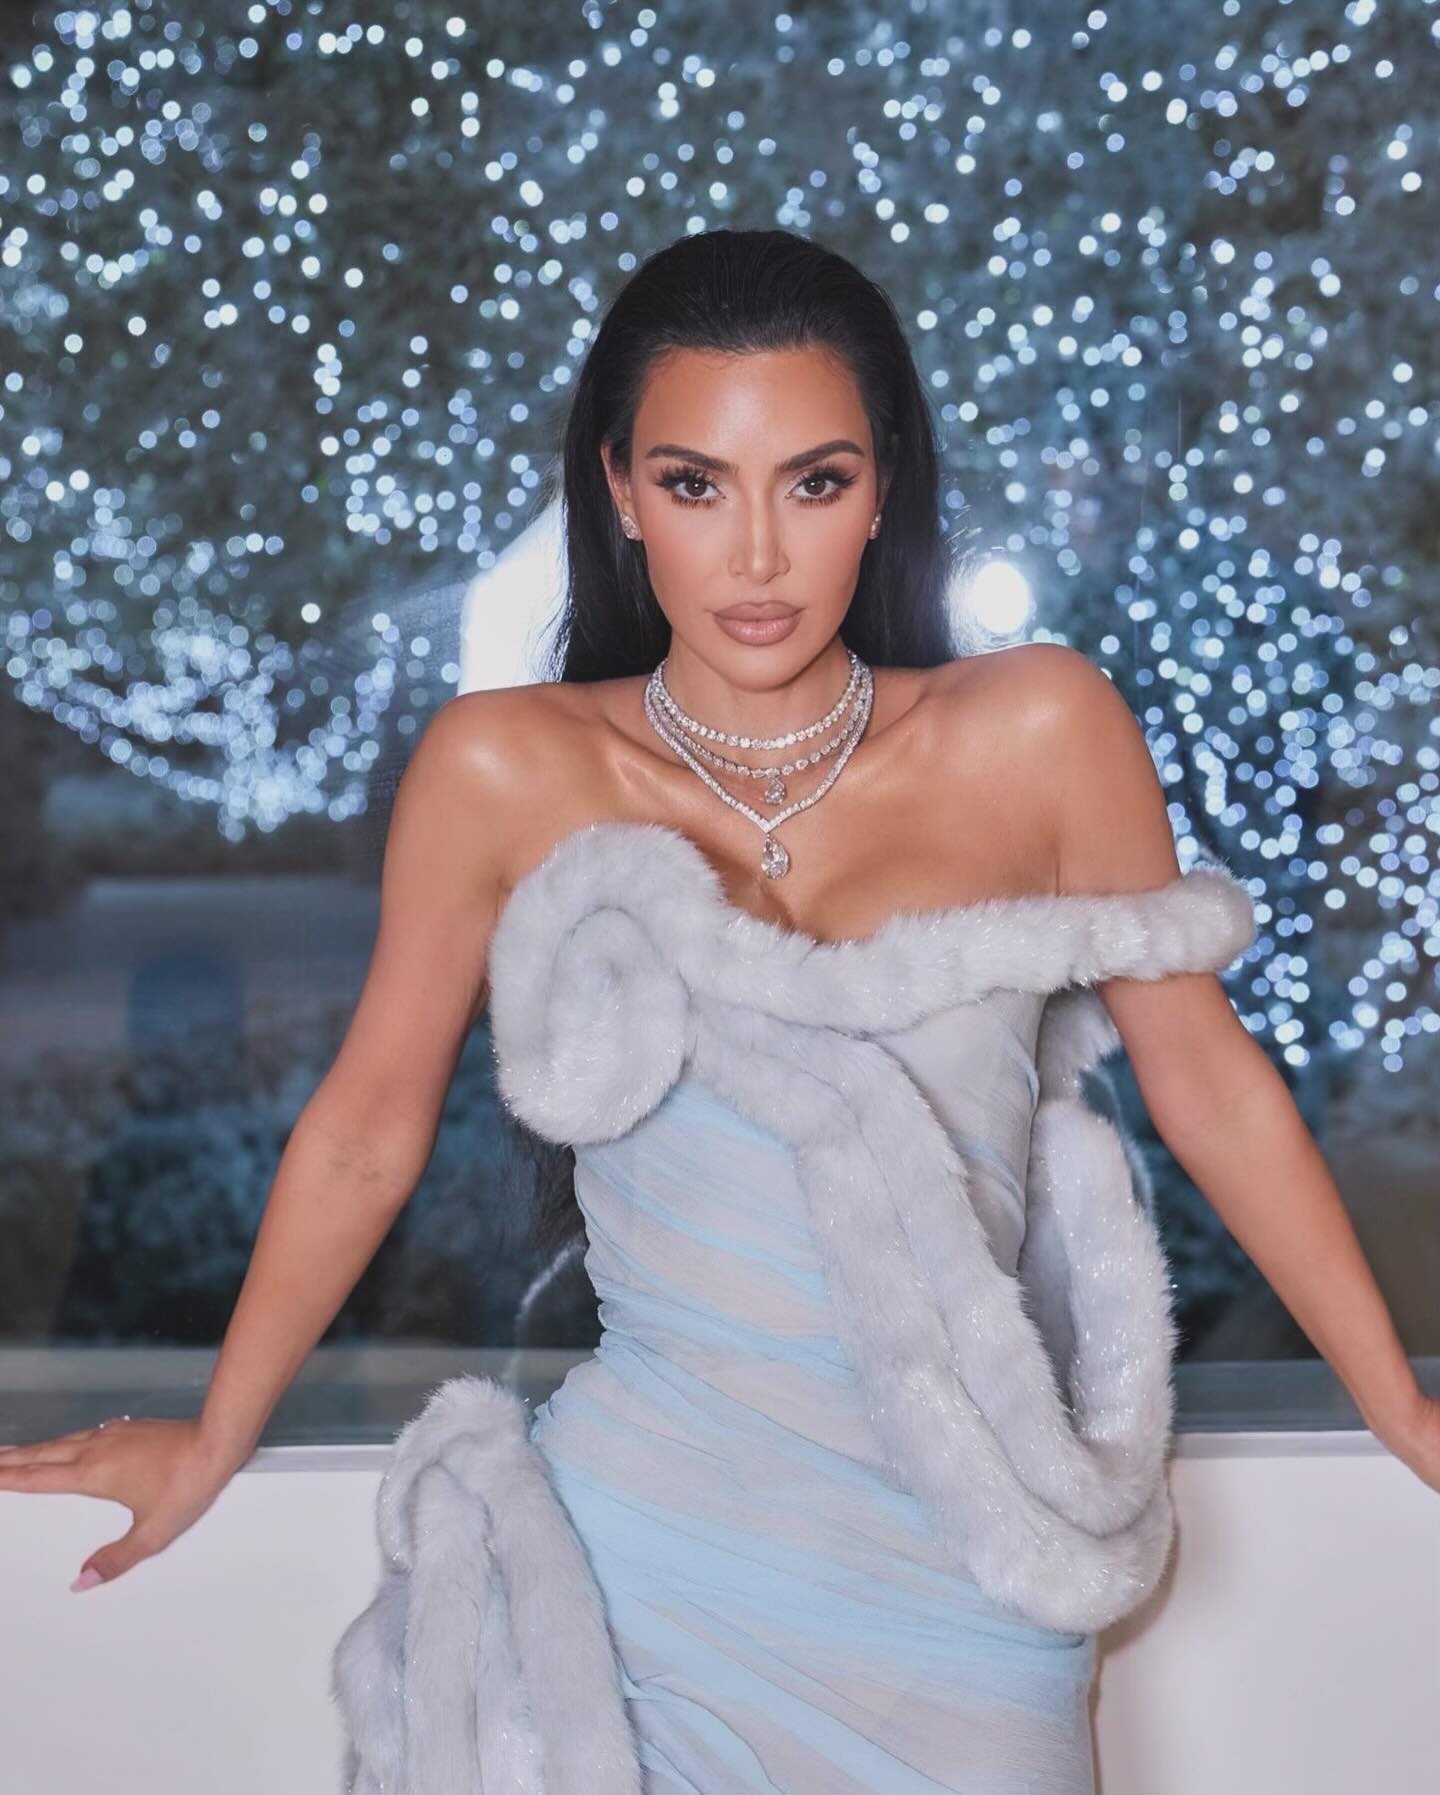 Fans have slammed Kim Kardashian for her extravagant decorations